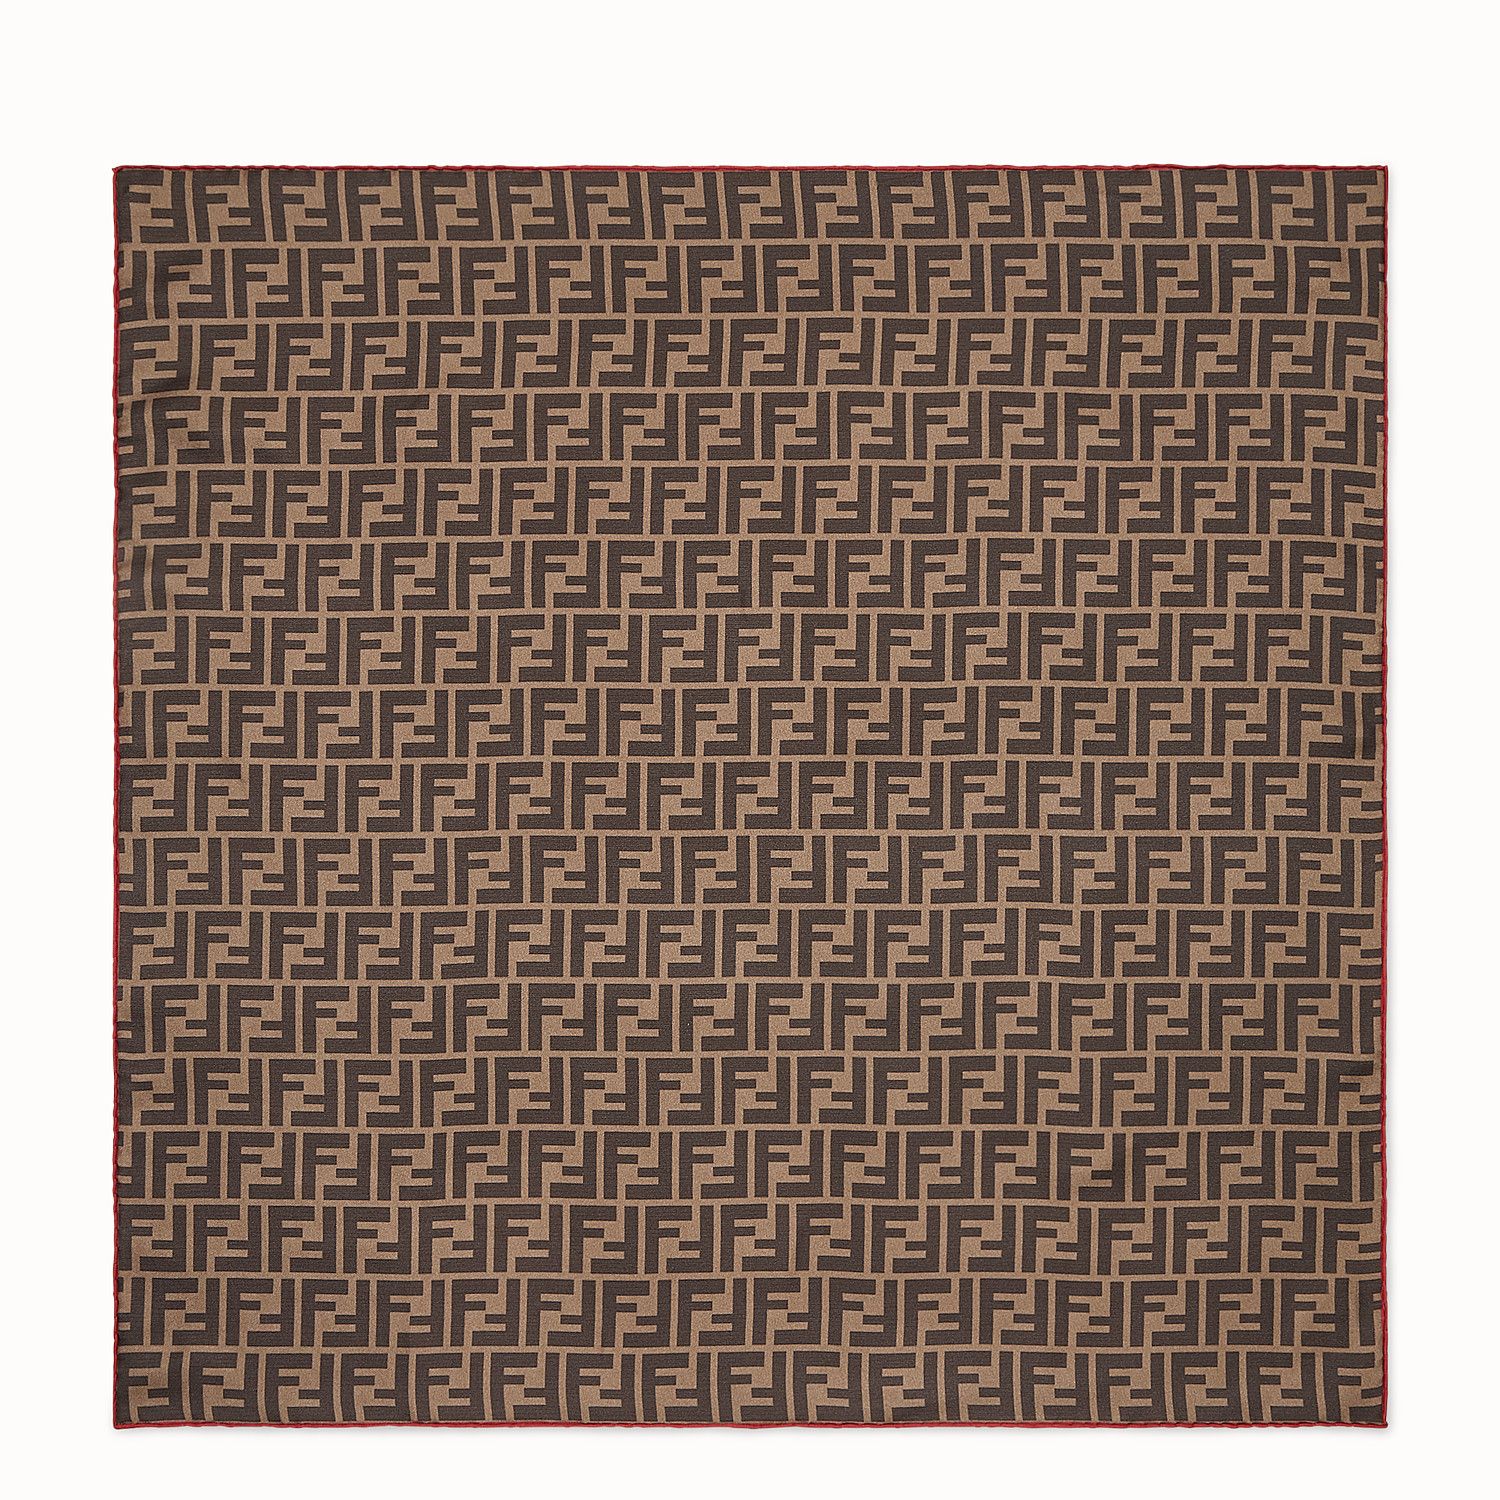 Fendi Patterns Wallpapers